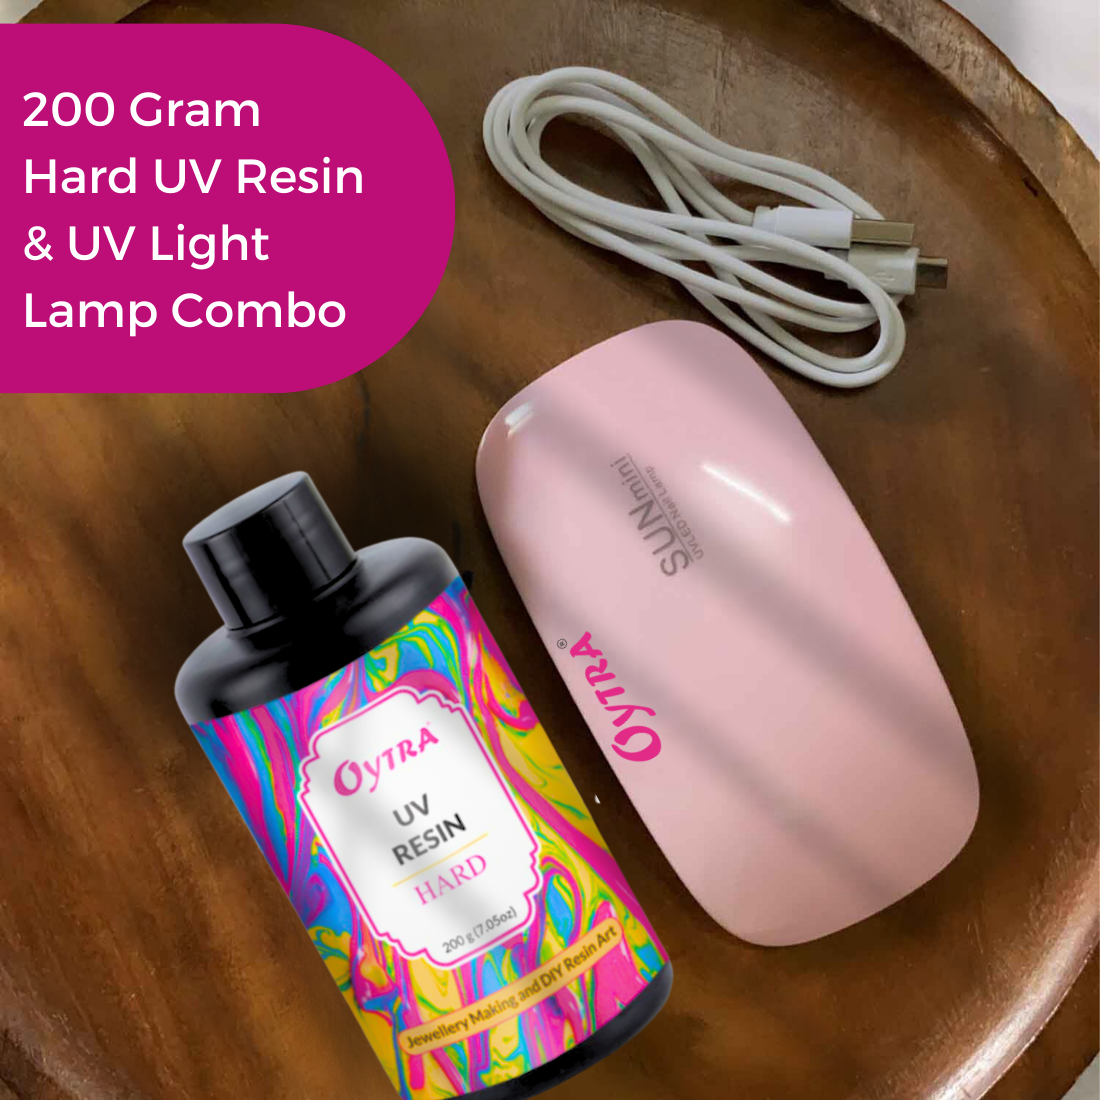 Oytra 200g UV Resin Hard and UV Lamp Combo